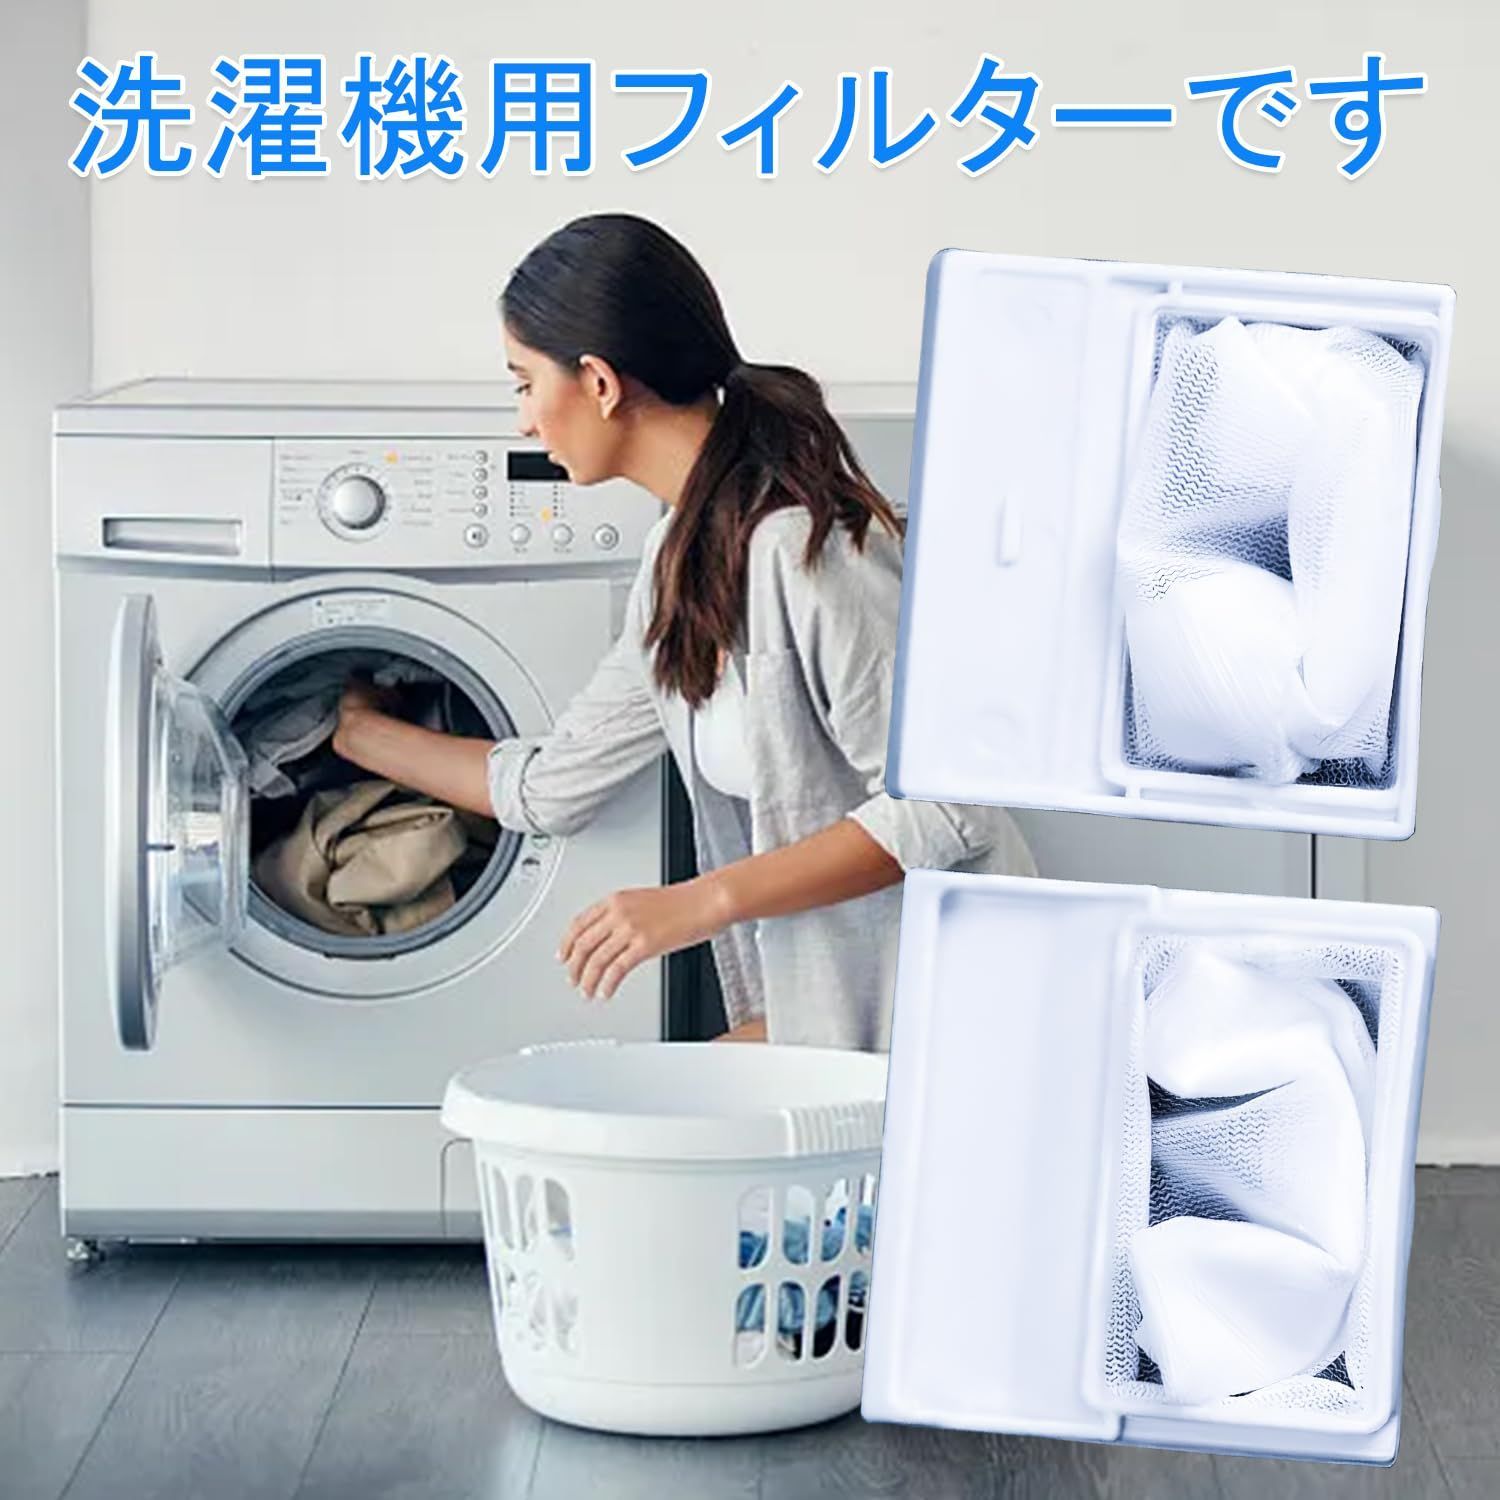 HITACHI洗濯乾燥機 糸くずフィルター - 洗濯機